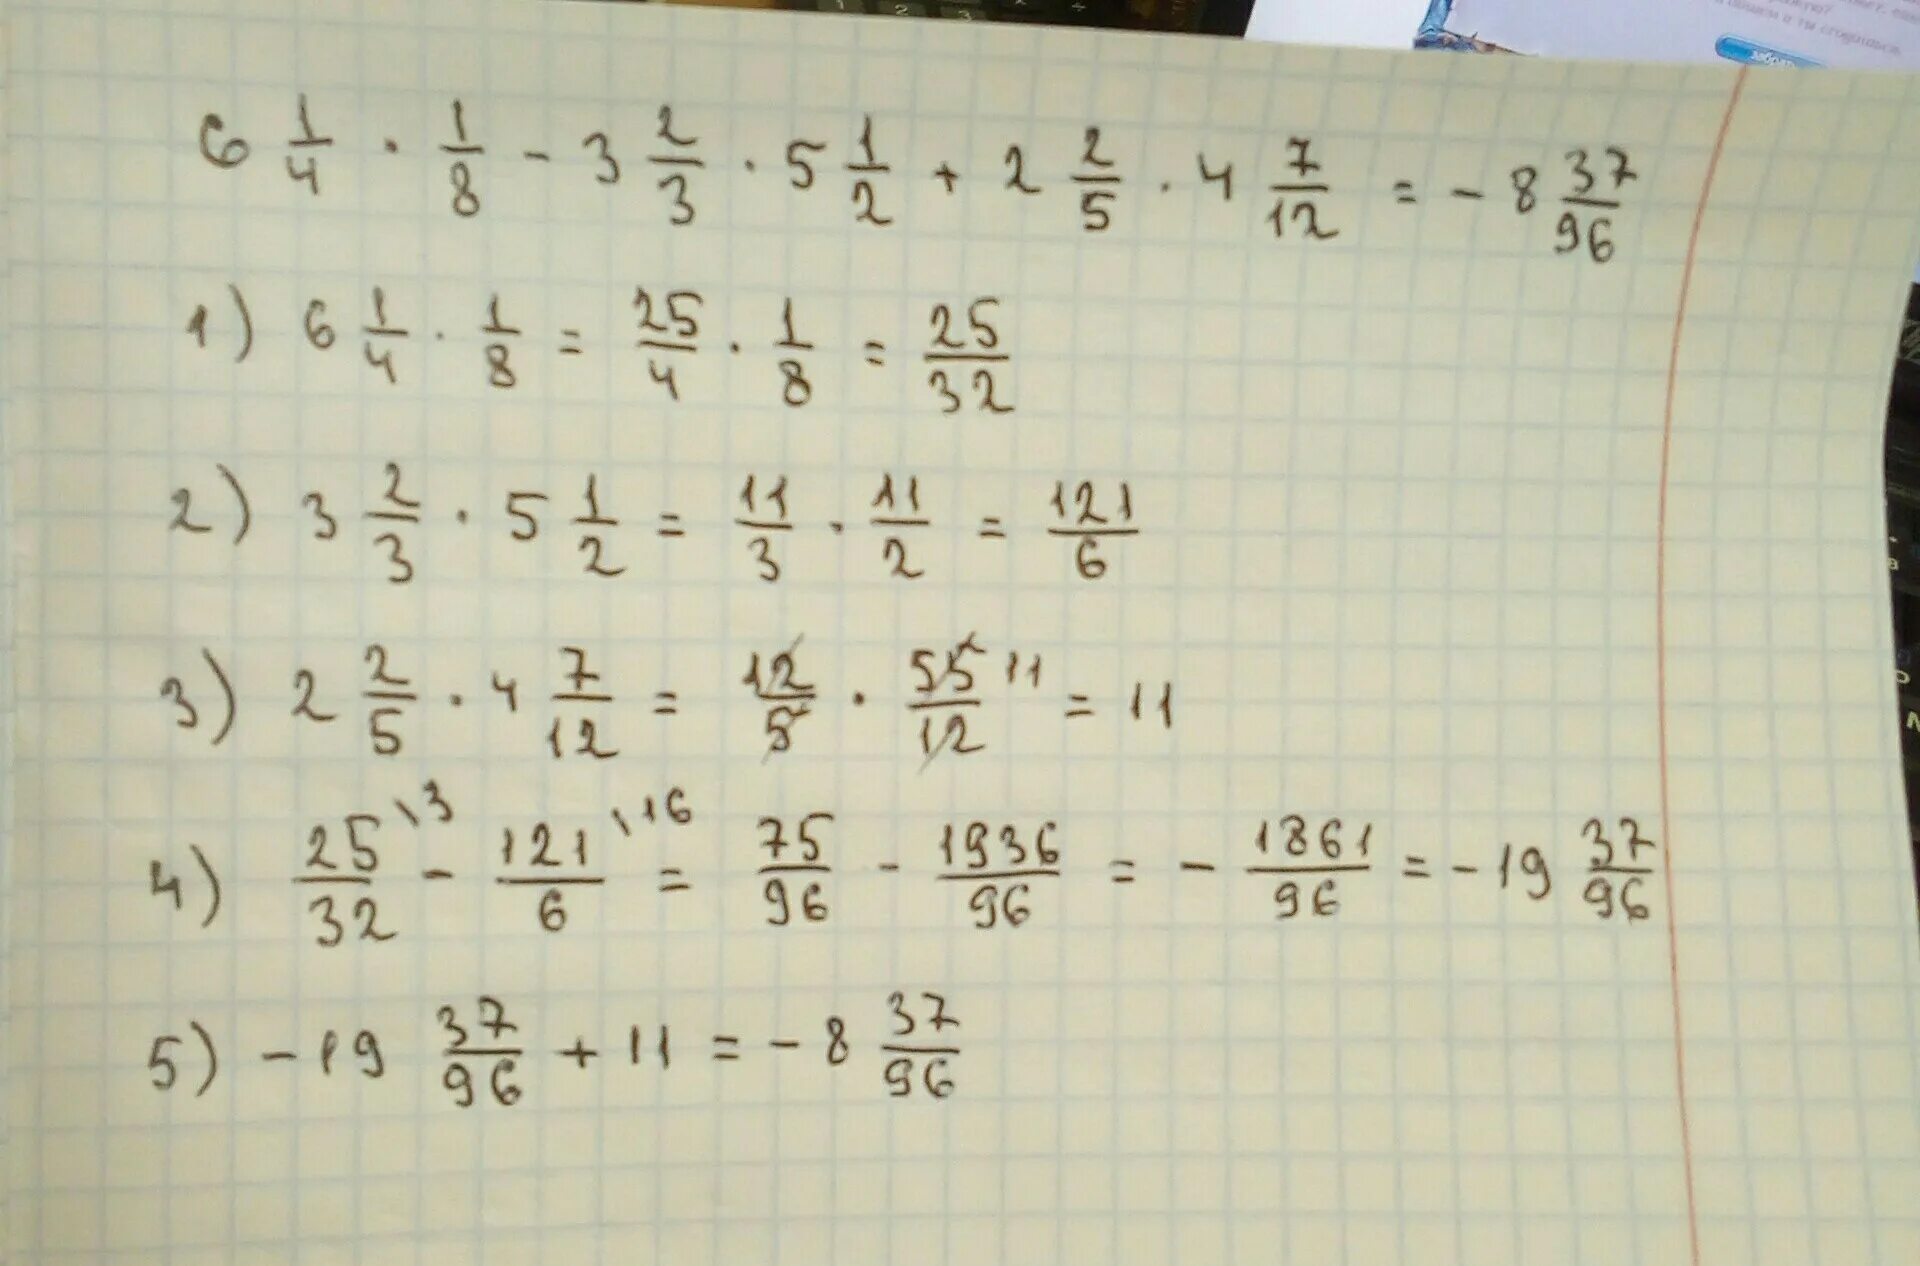 Реши пример 2 3 плюс 1 7. 2/3 Умножить на 4/5. 2 Целых 1 2 умножить на 3 4. 6 Целых 2 5 умножить на 2 целых 1 4 и умножить на 1 целую 7 8. Пример 3 целых 1/4 умножить на 4.